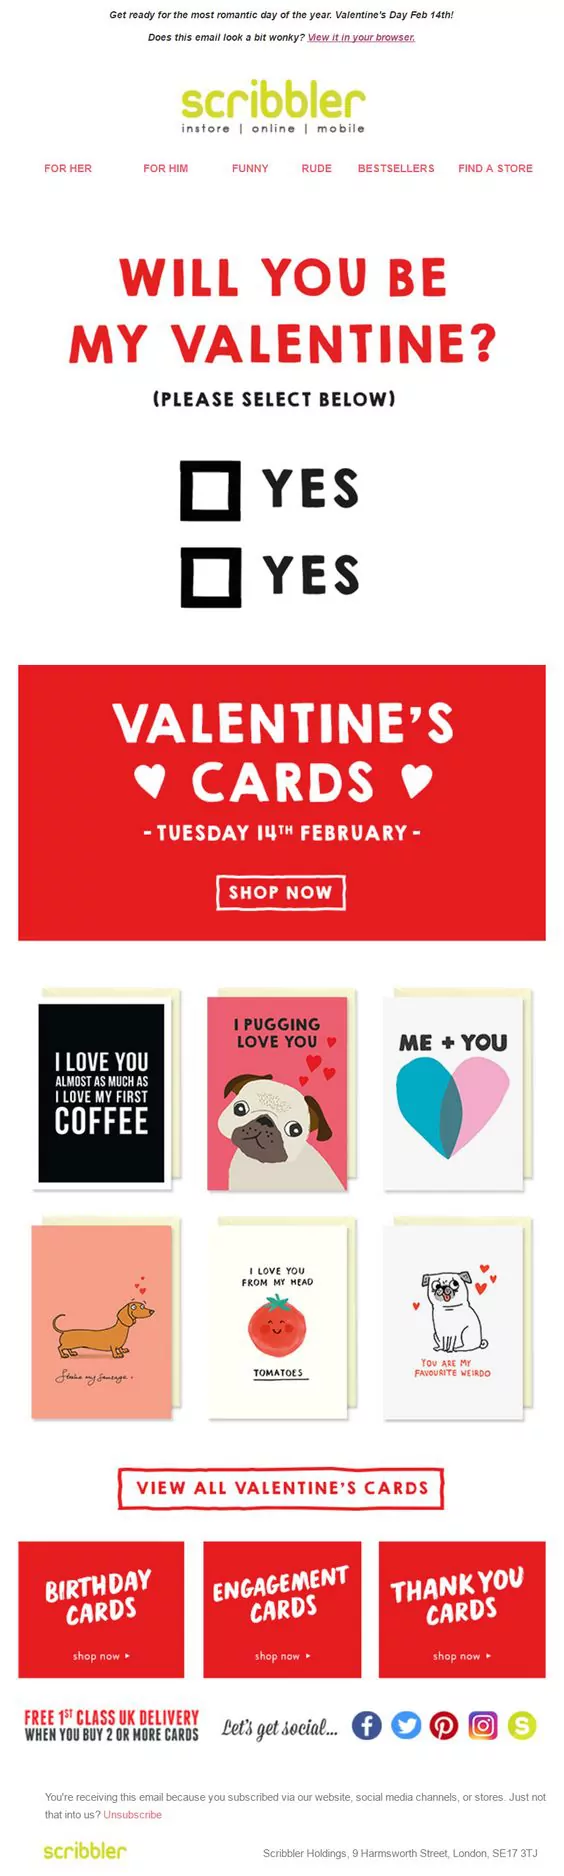 Scribbler "will you be my valentine?" Valentine email design